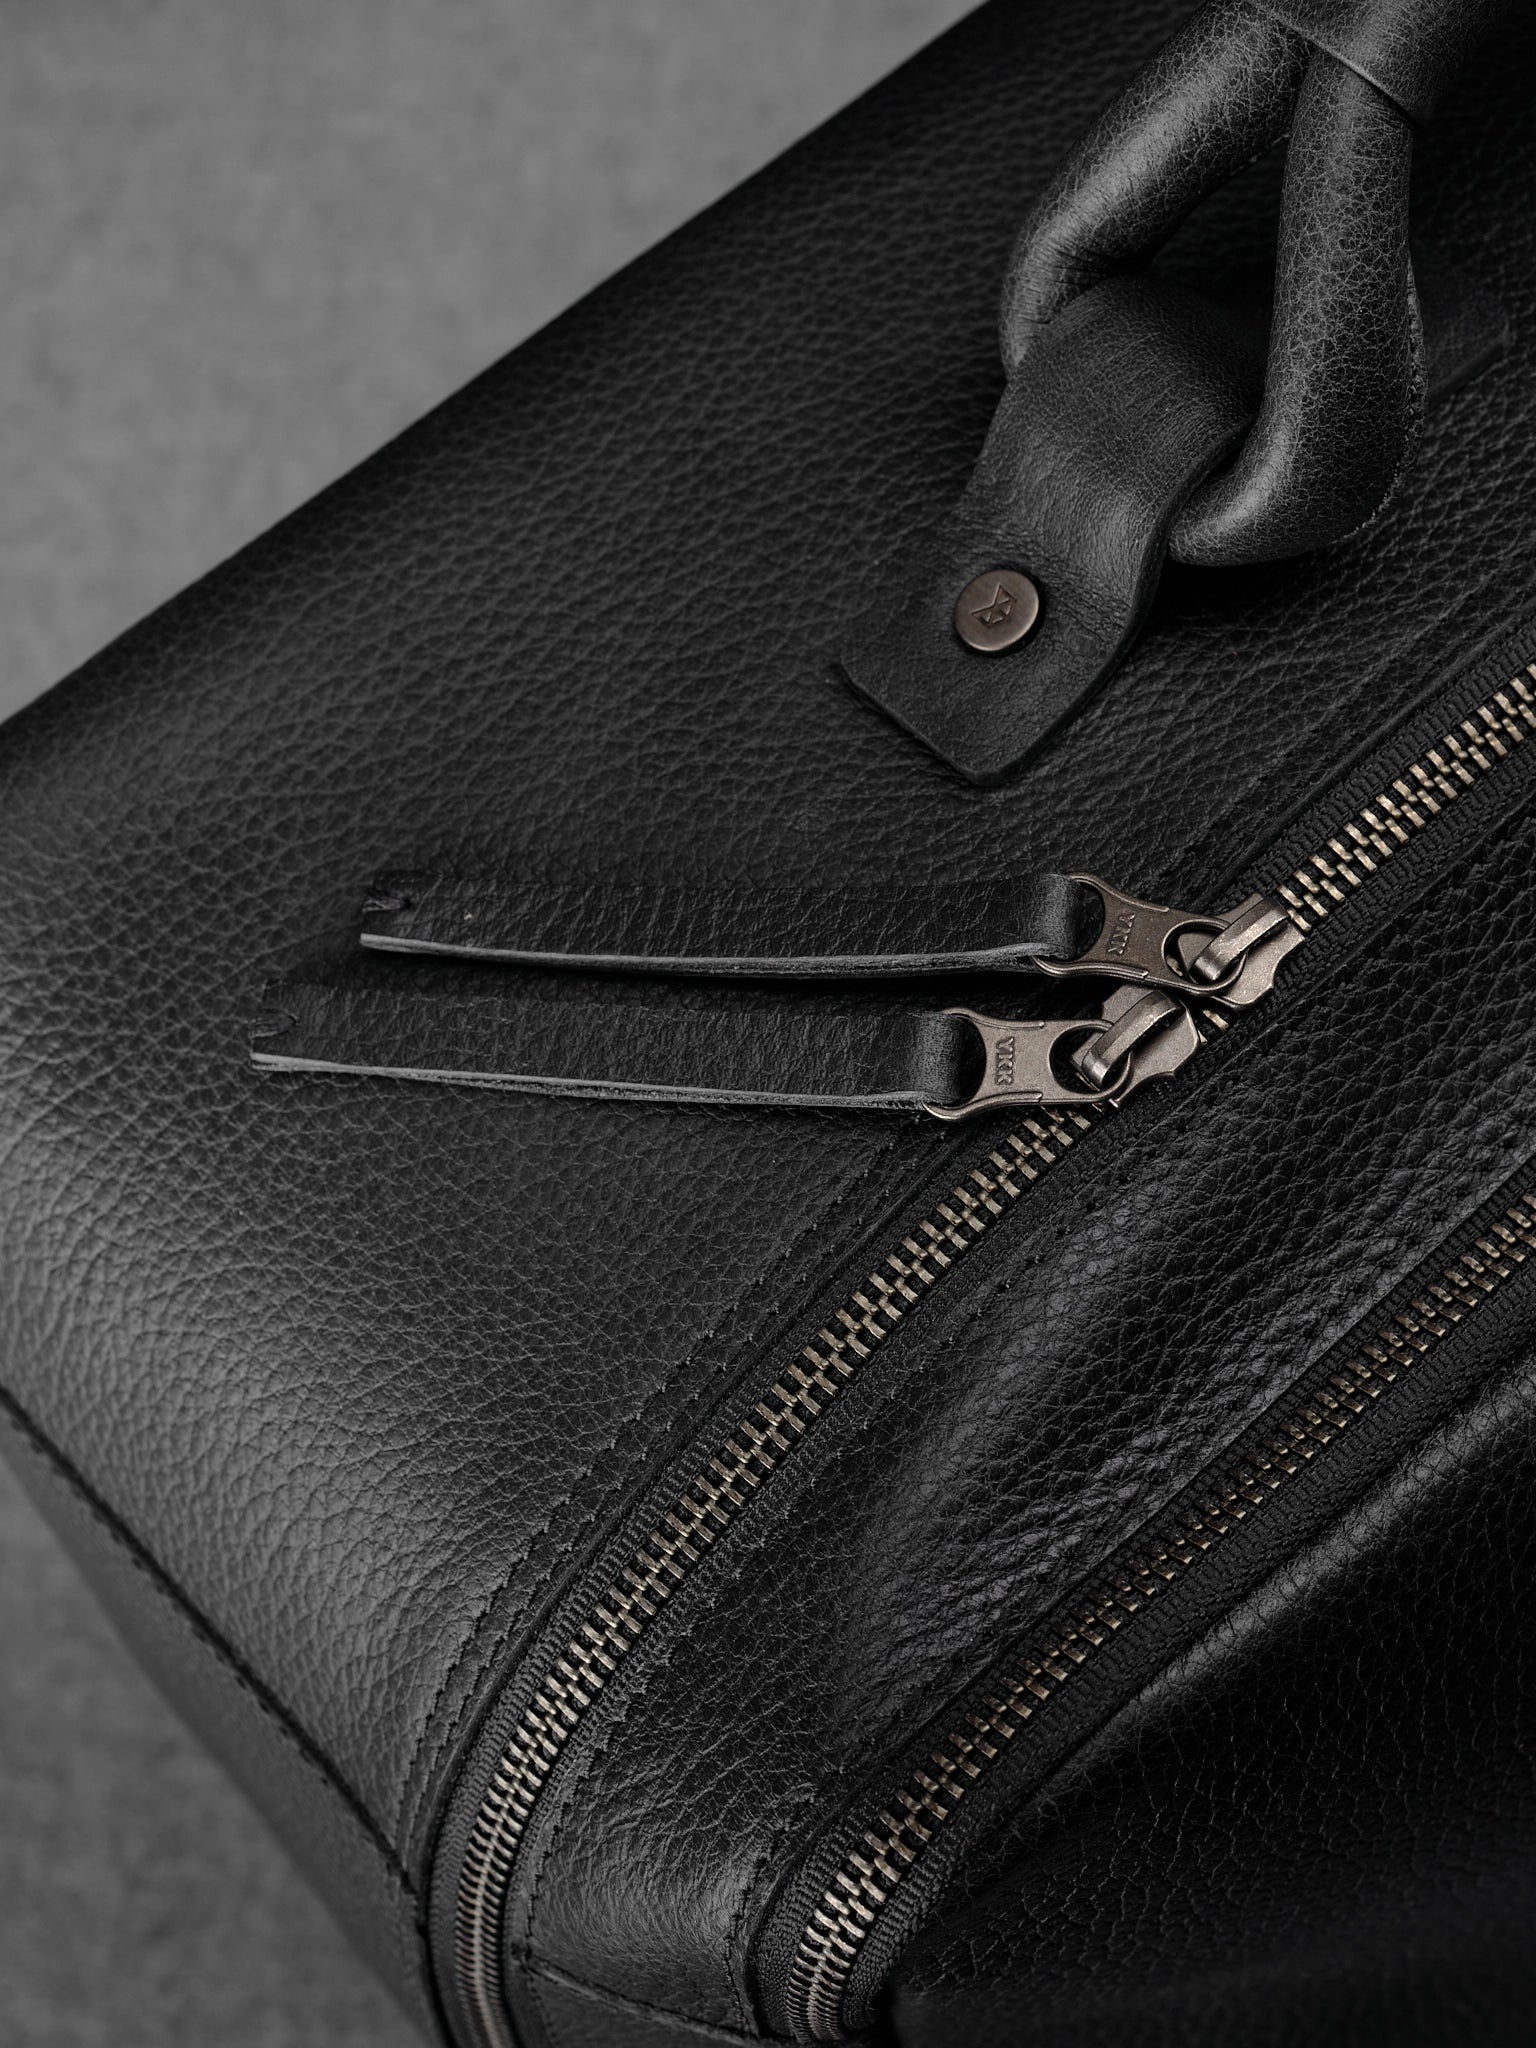 YKK Zippers. Weekend Bag. Large Duffle Bag Black by Capra Leather